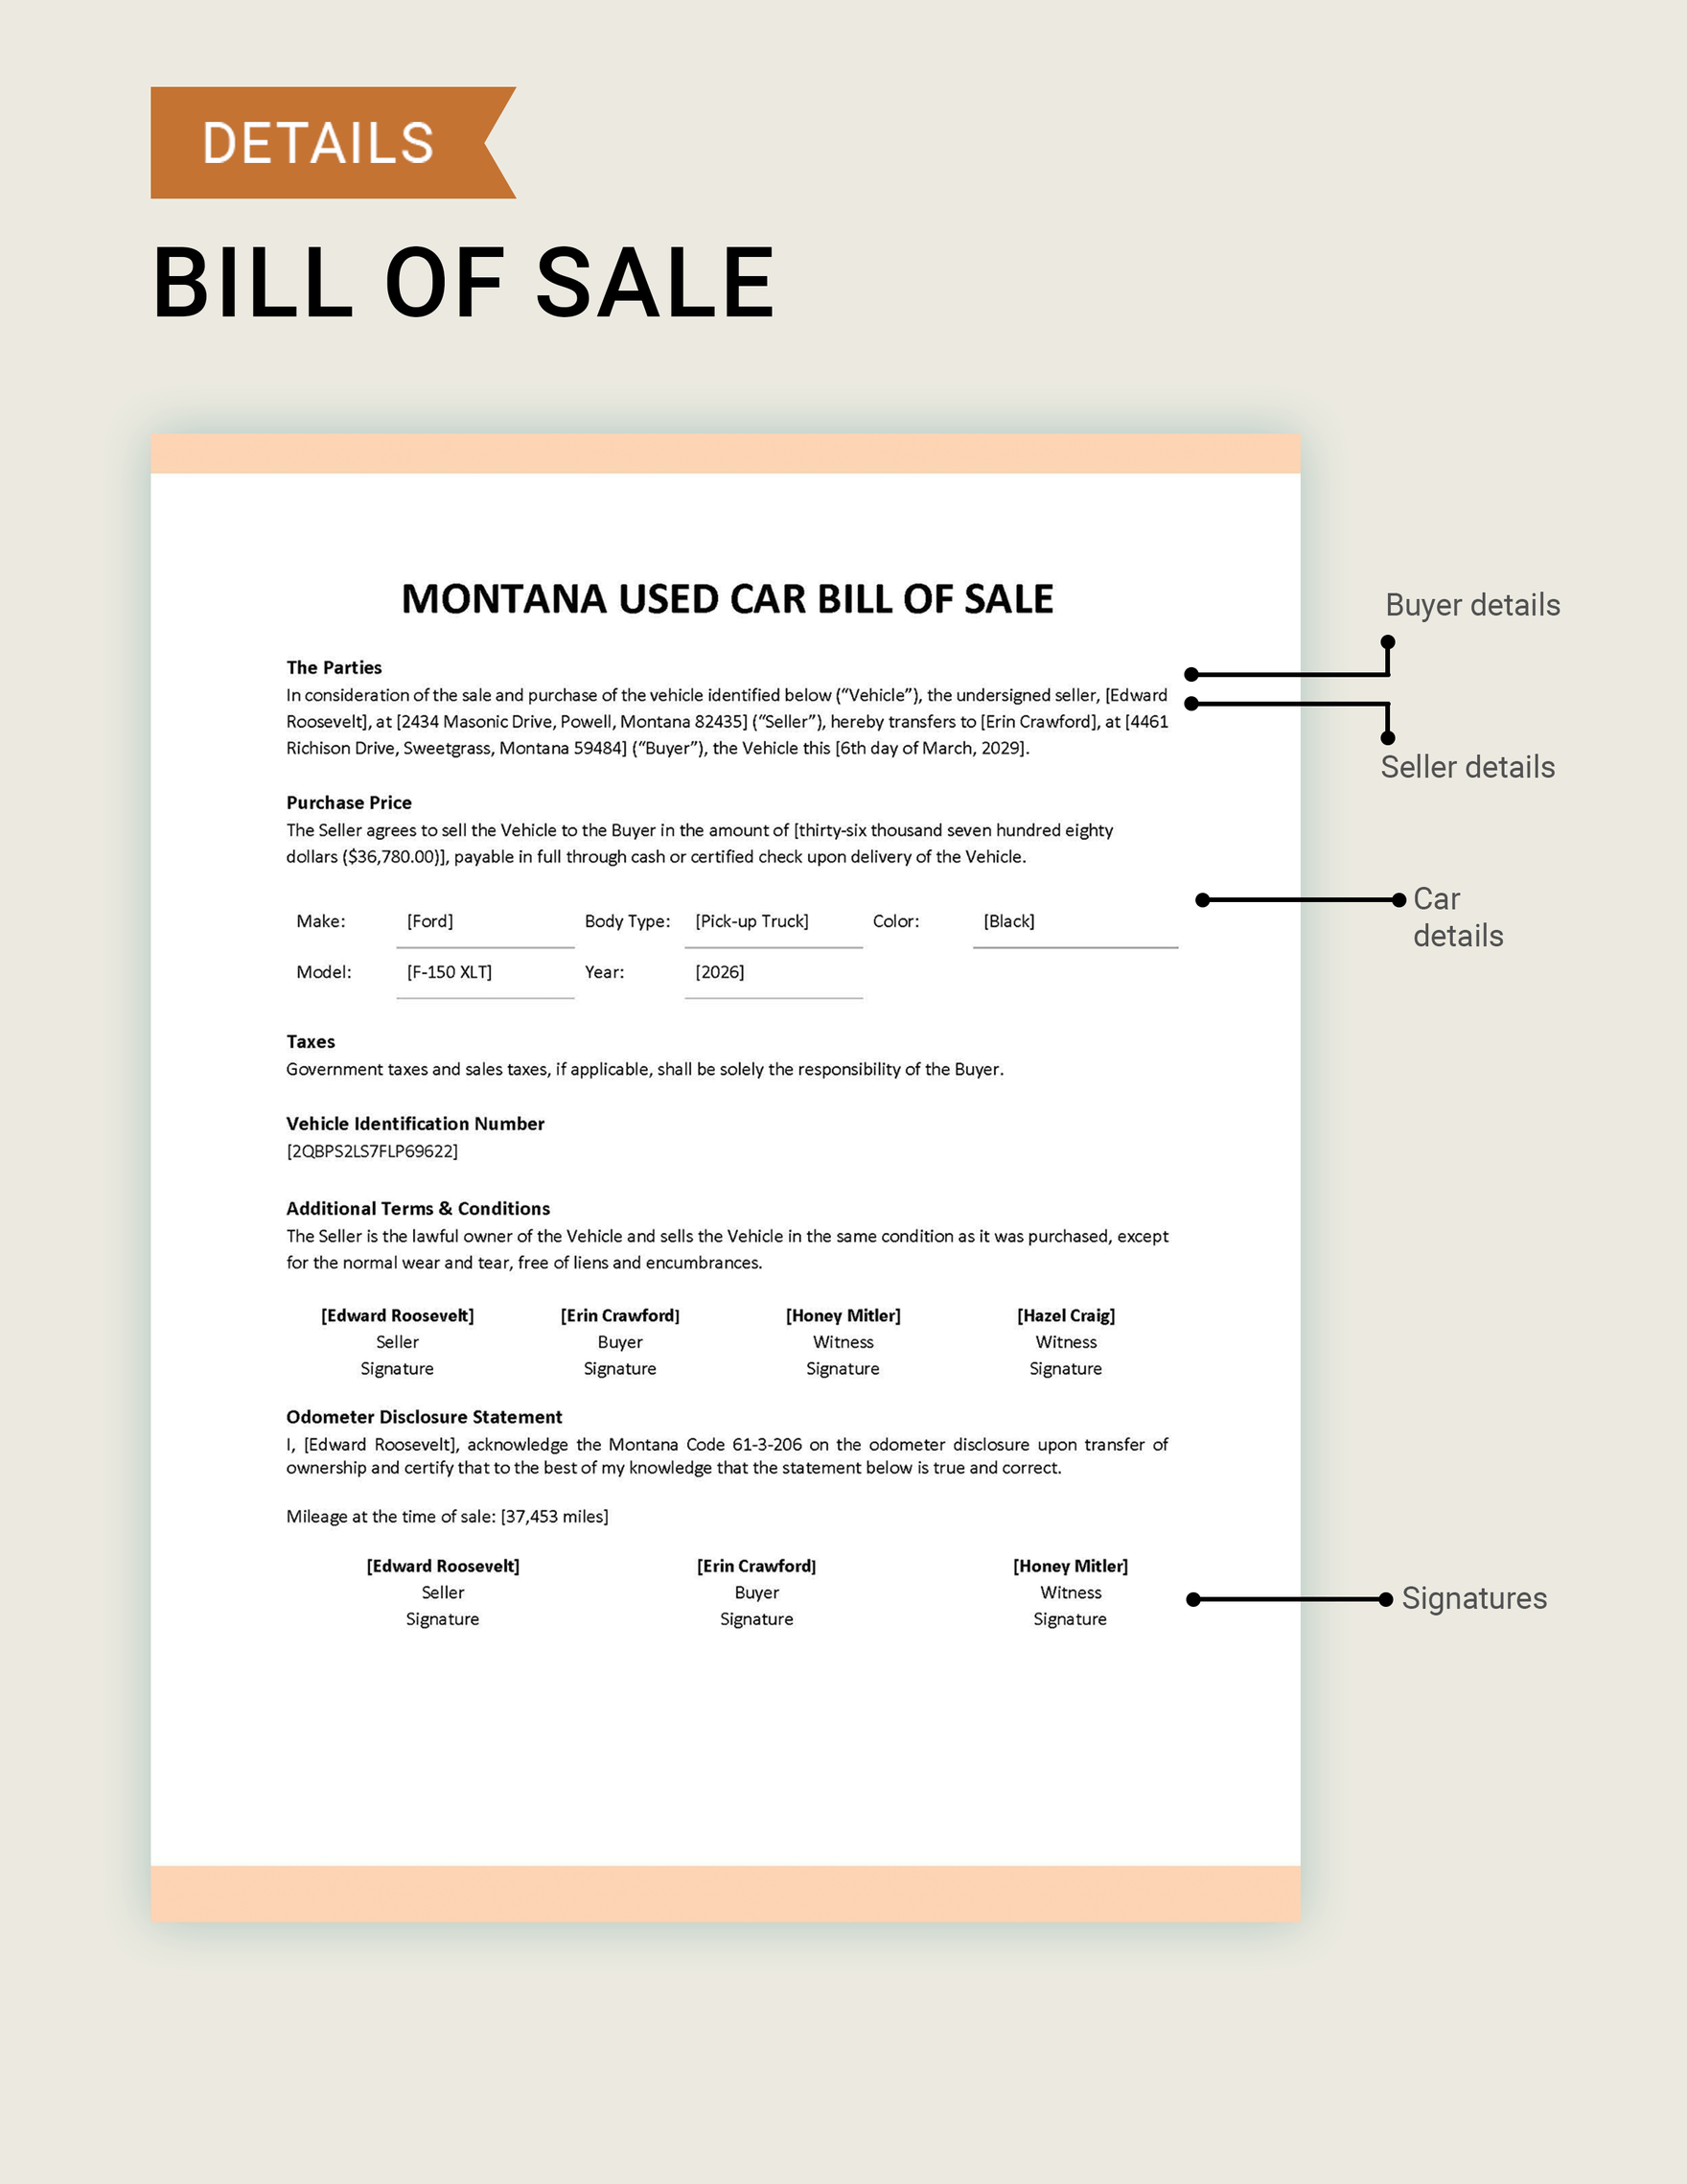 Montana Used Car Bill of Sale Template